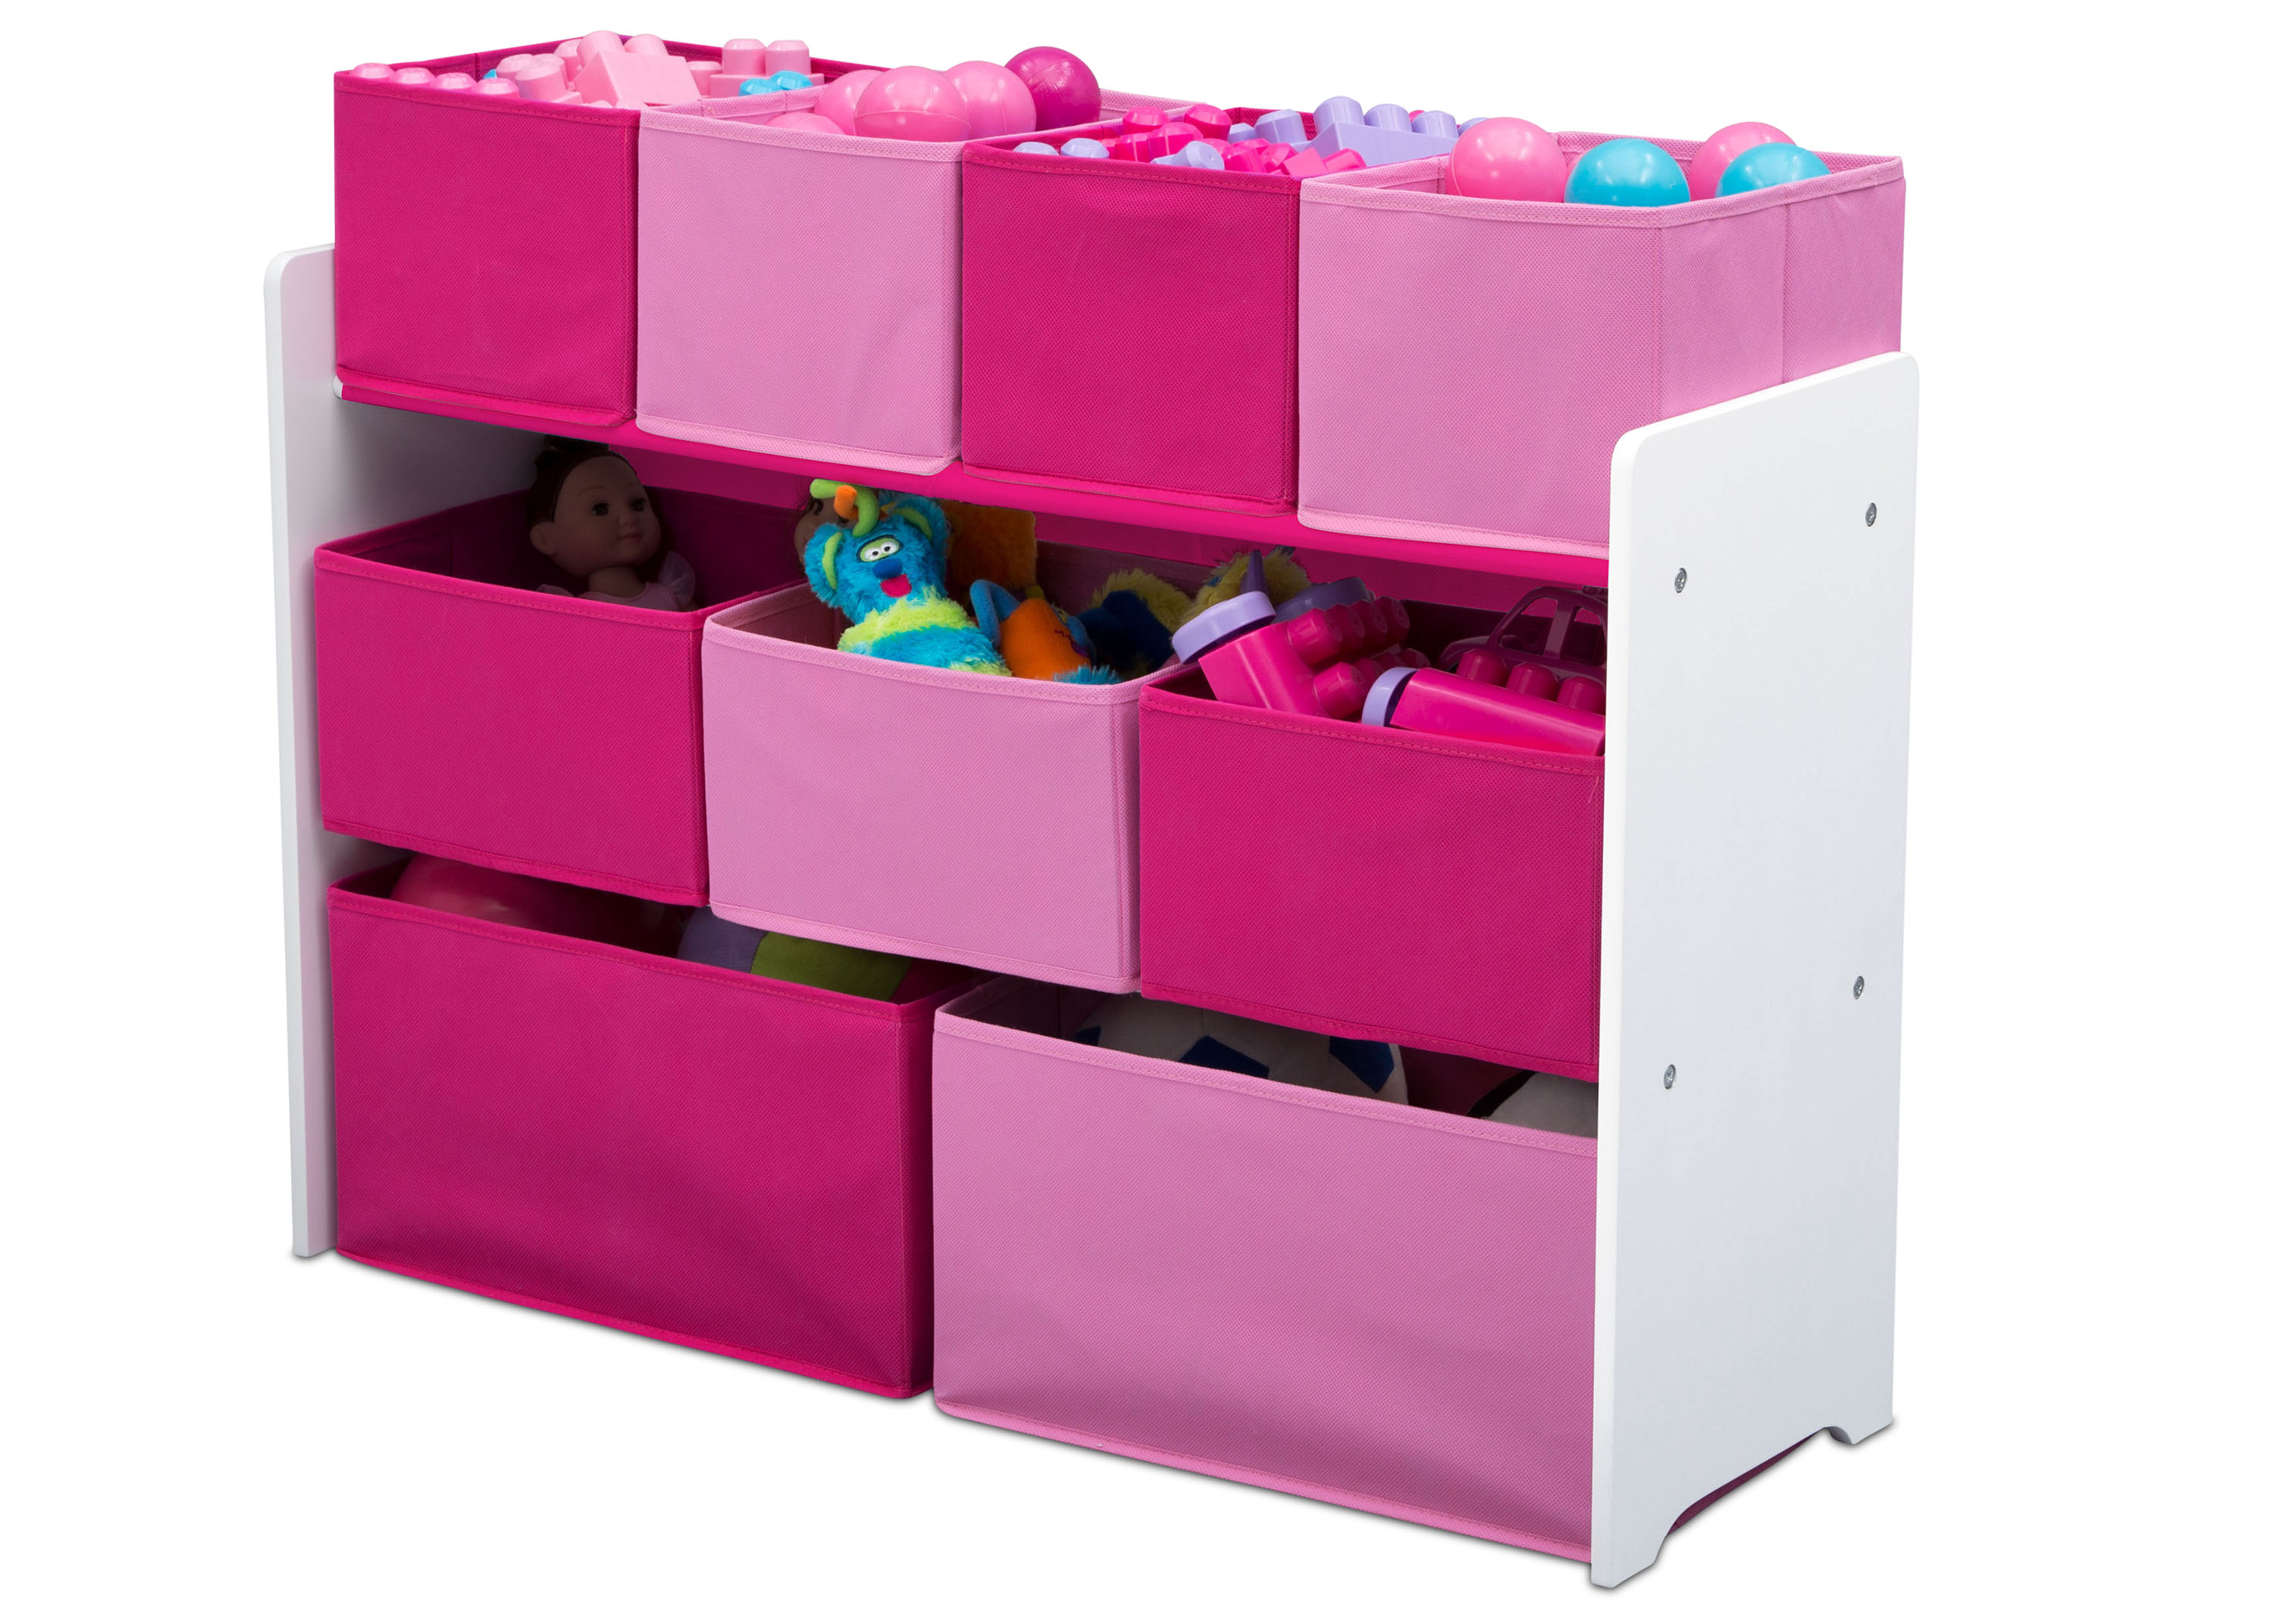 Delta Children Deluxe Multi-Bin Toy Organizer with Storage Bins, Greenguard Gold, Wood, White - image 4 of 6